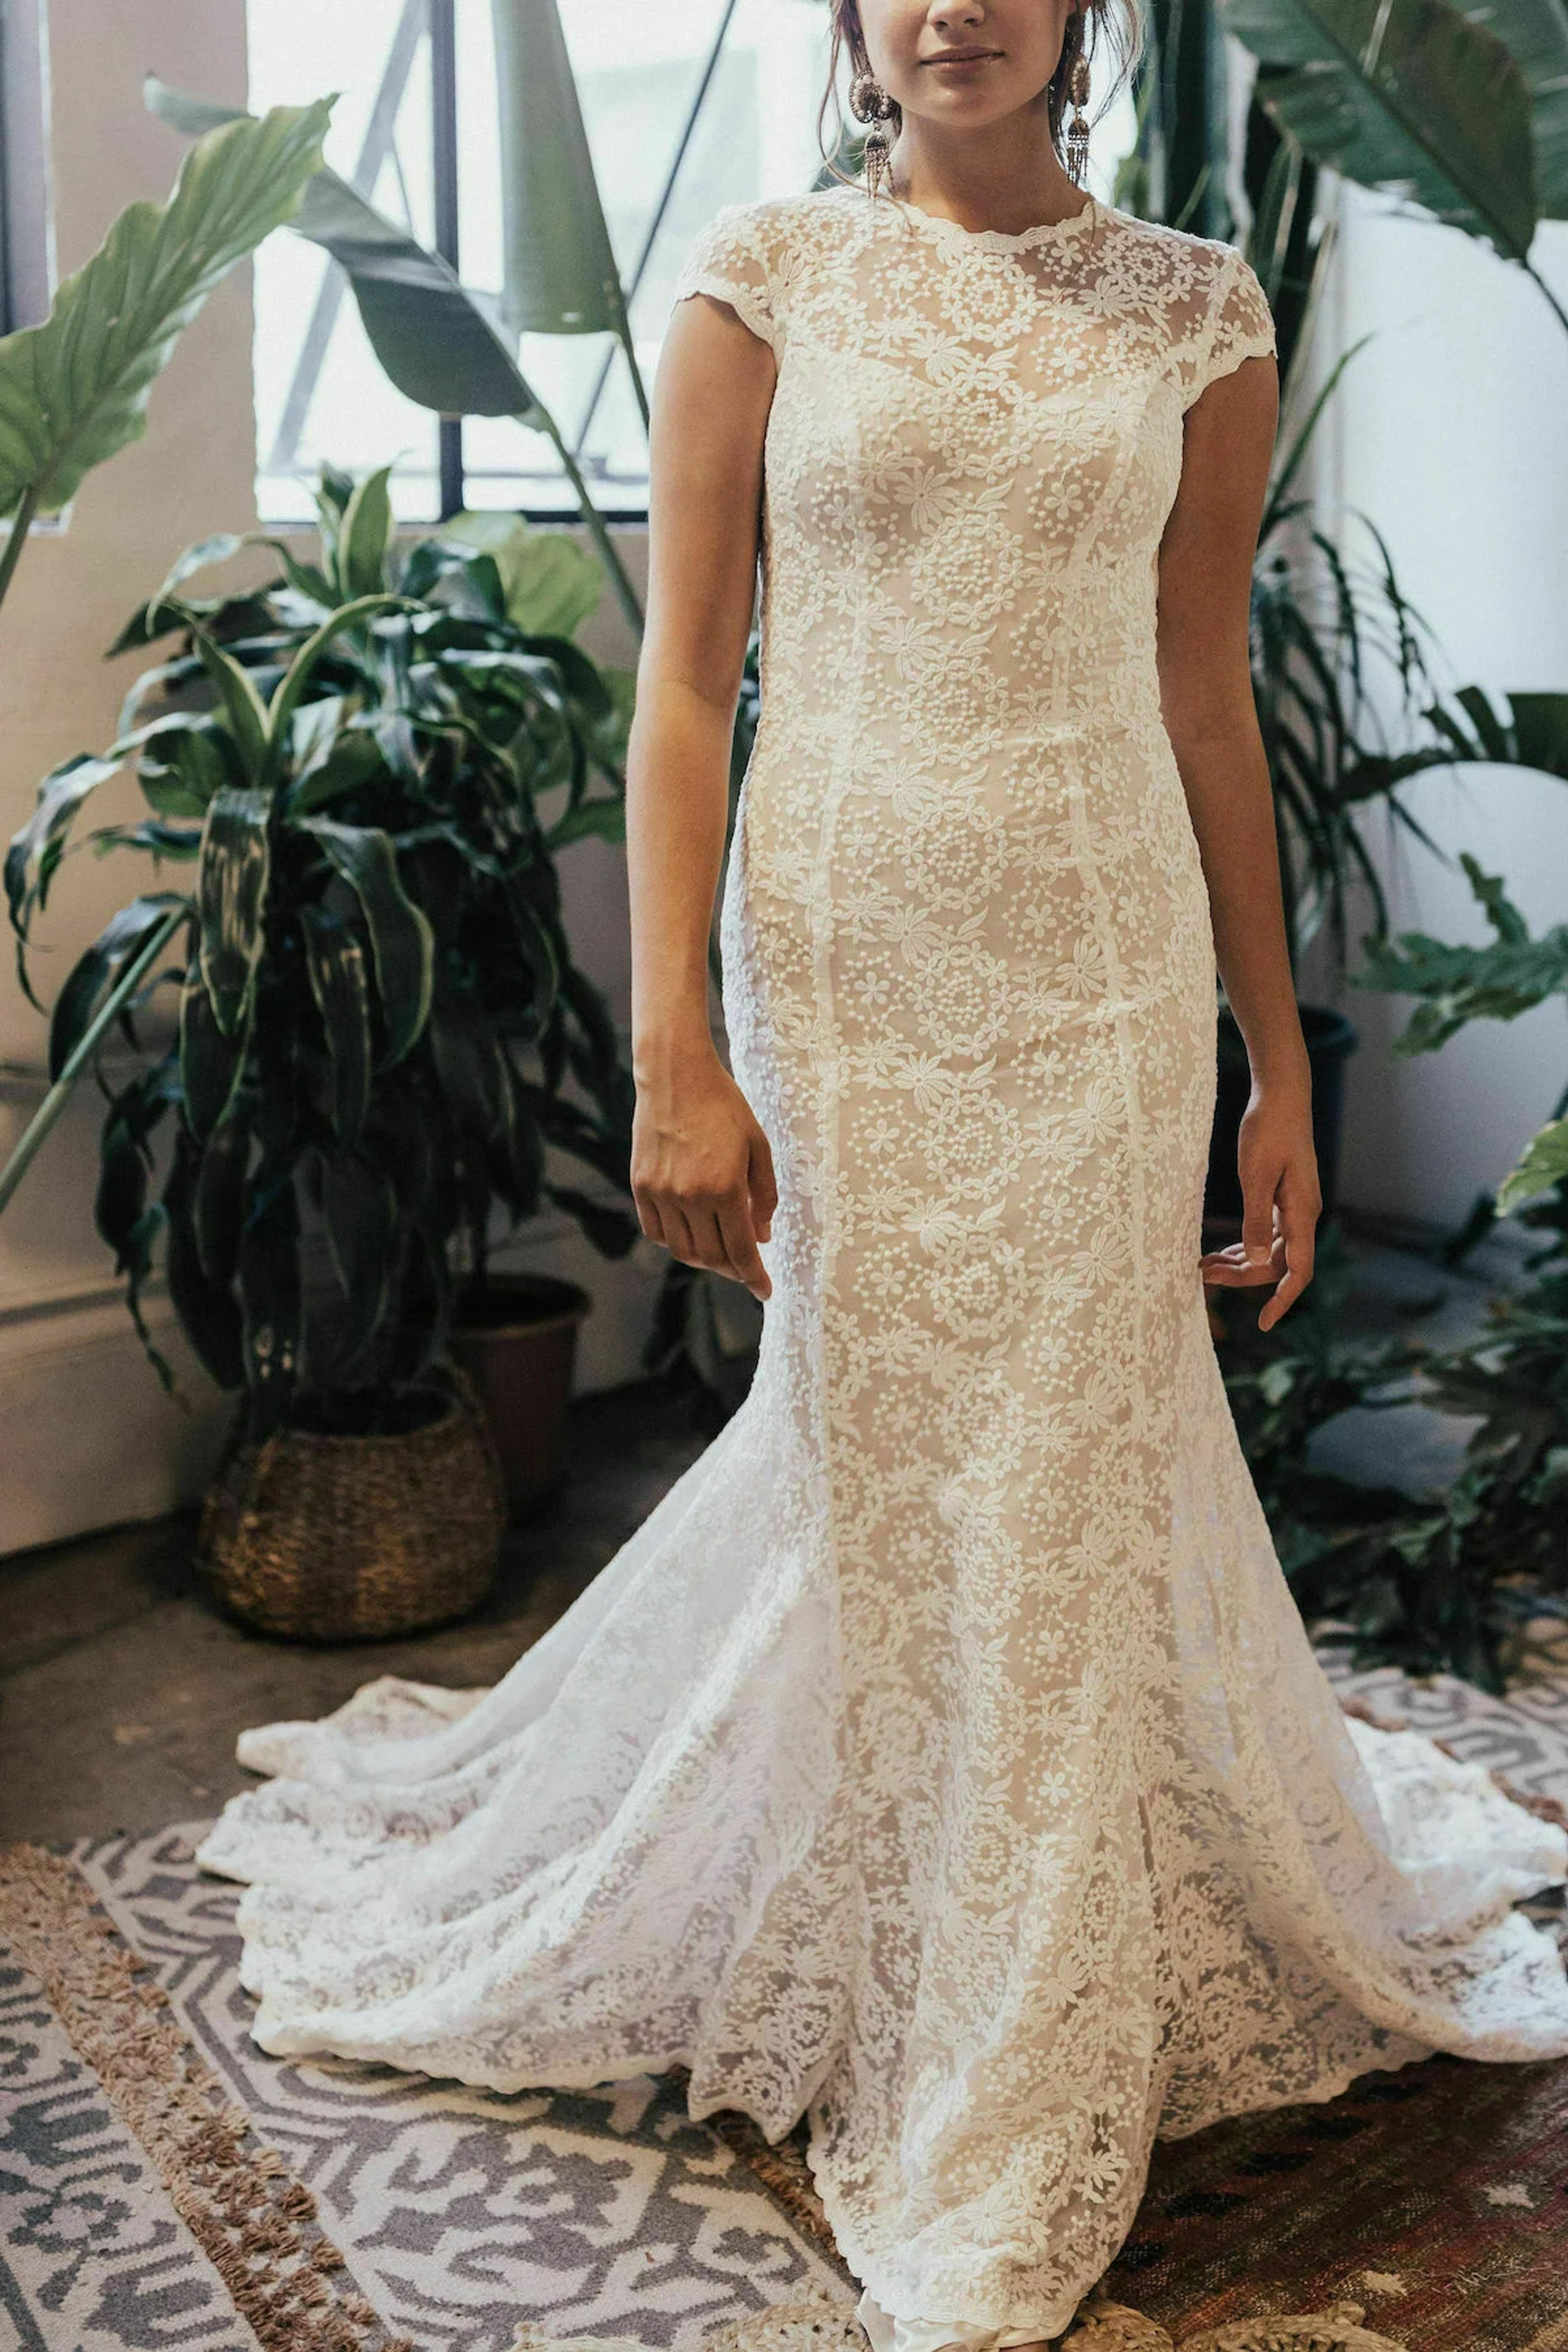 dreamersandlovers.com/product/alice-ivory-lace-backless-simple-elegant-wedding-dress/